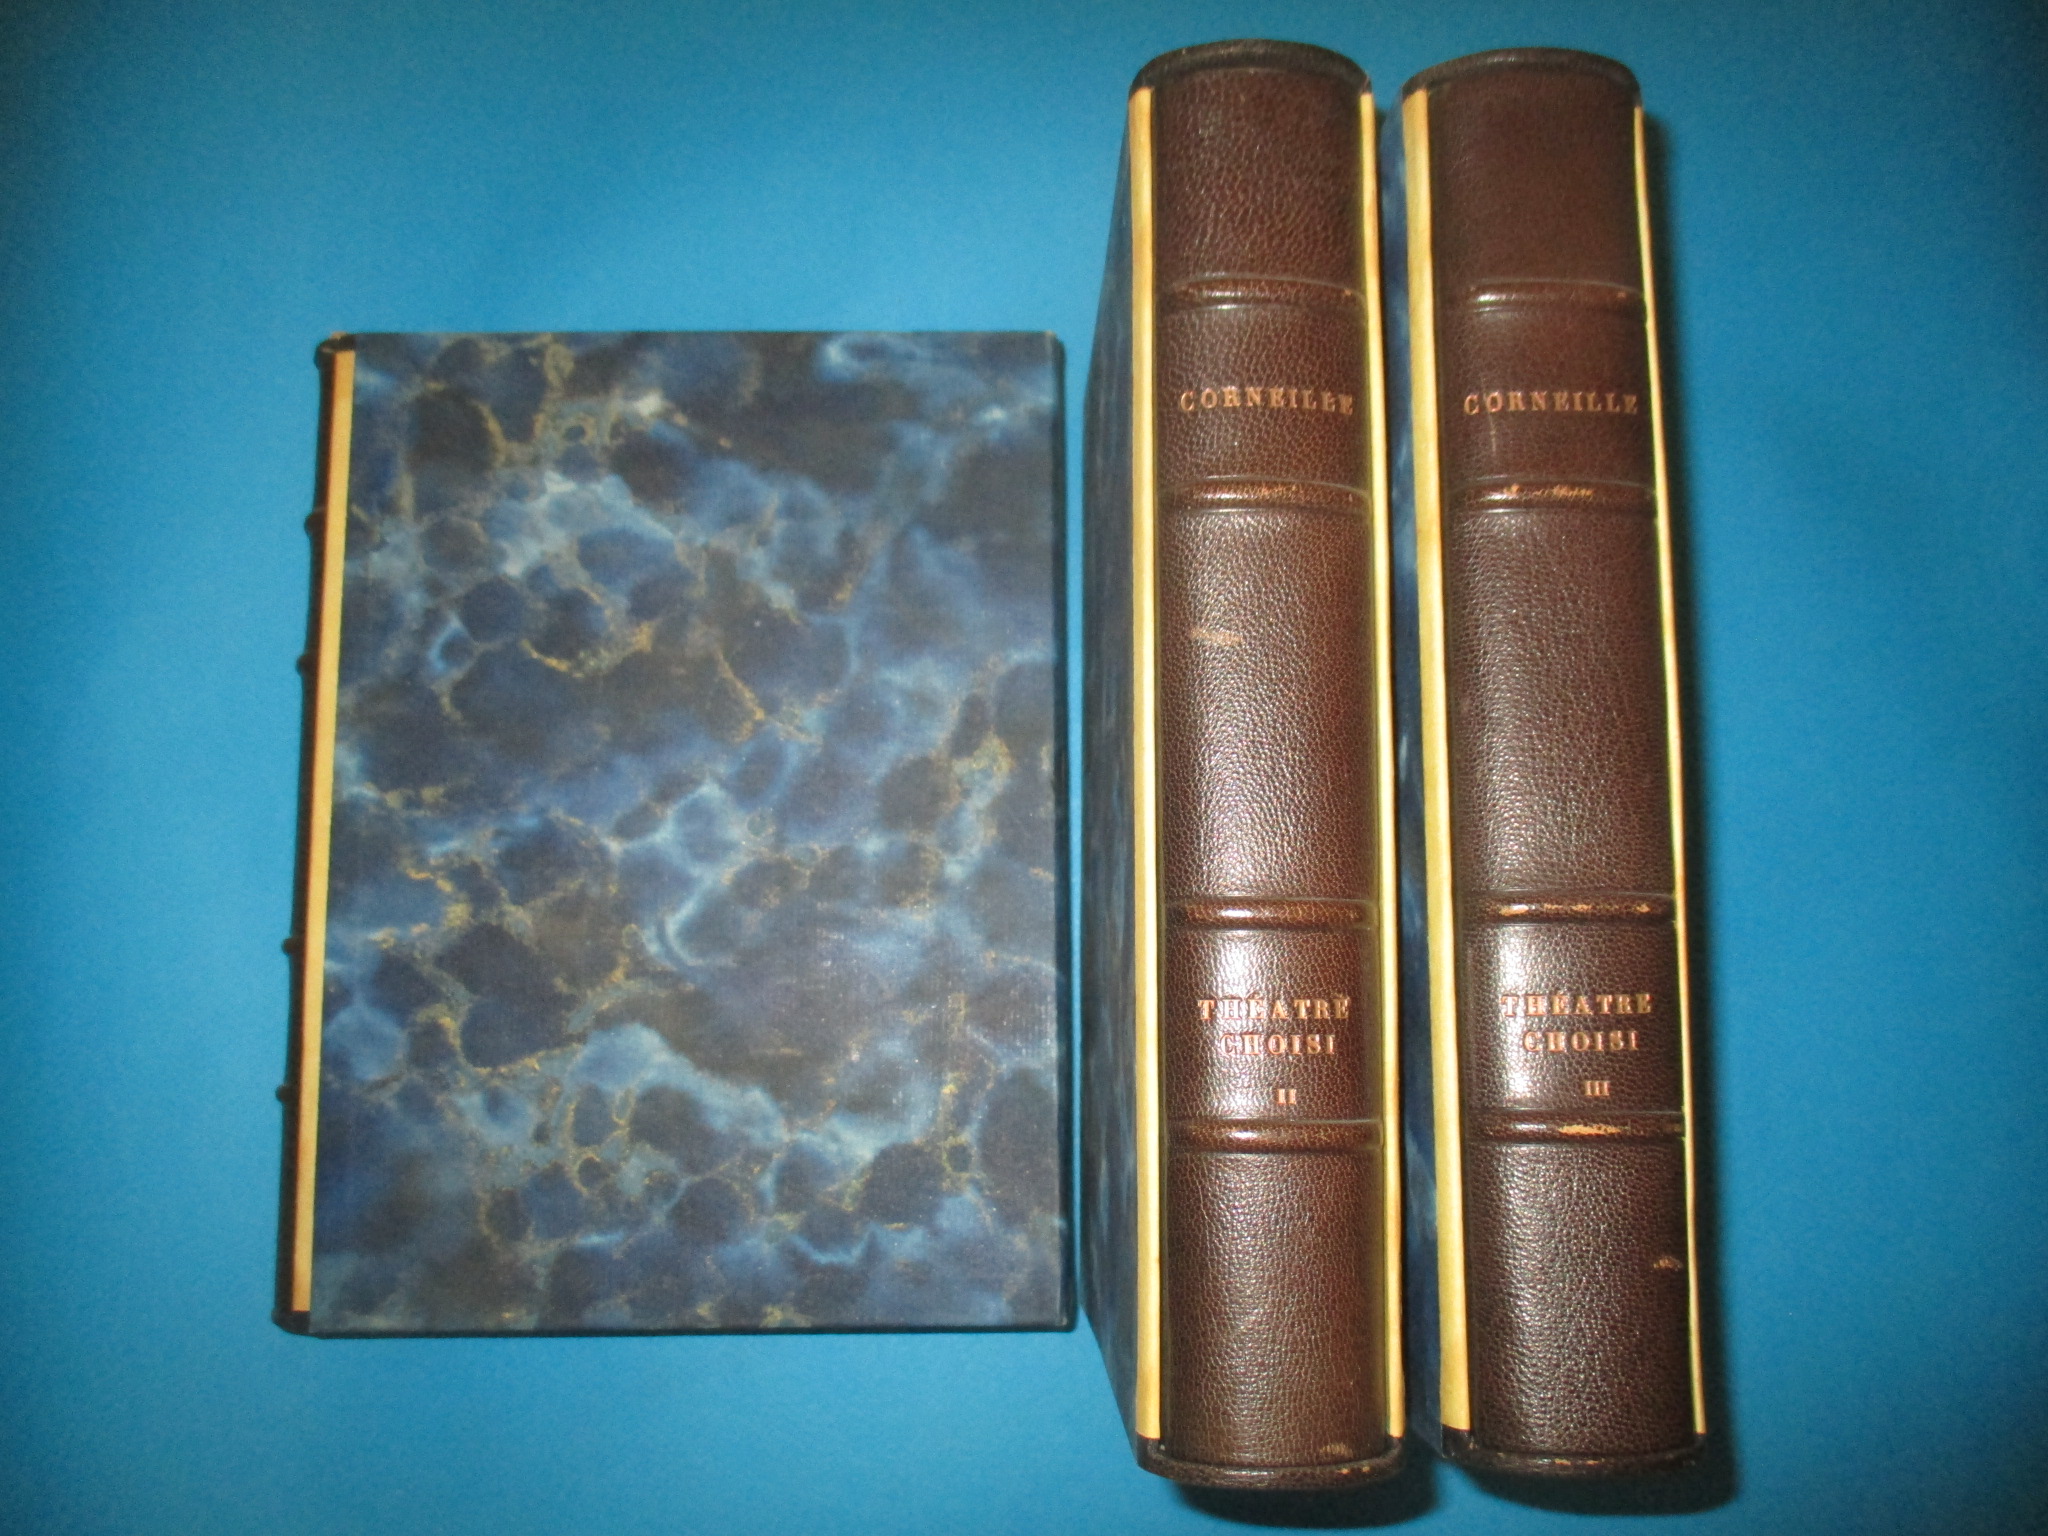 Chefs-d\'Oeuvre de Corneille en 3 volumes, emboîtages, burins de Serres Cami & Lemagny, n° Imprimatur 1954